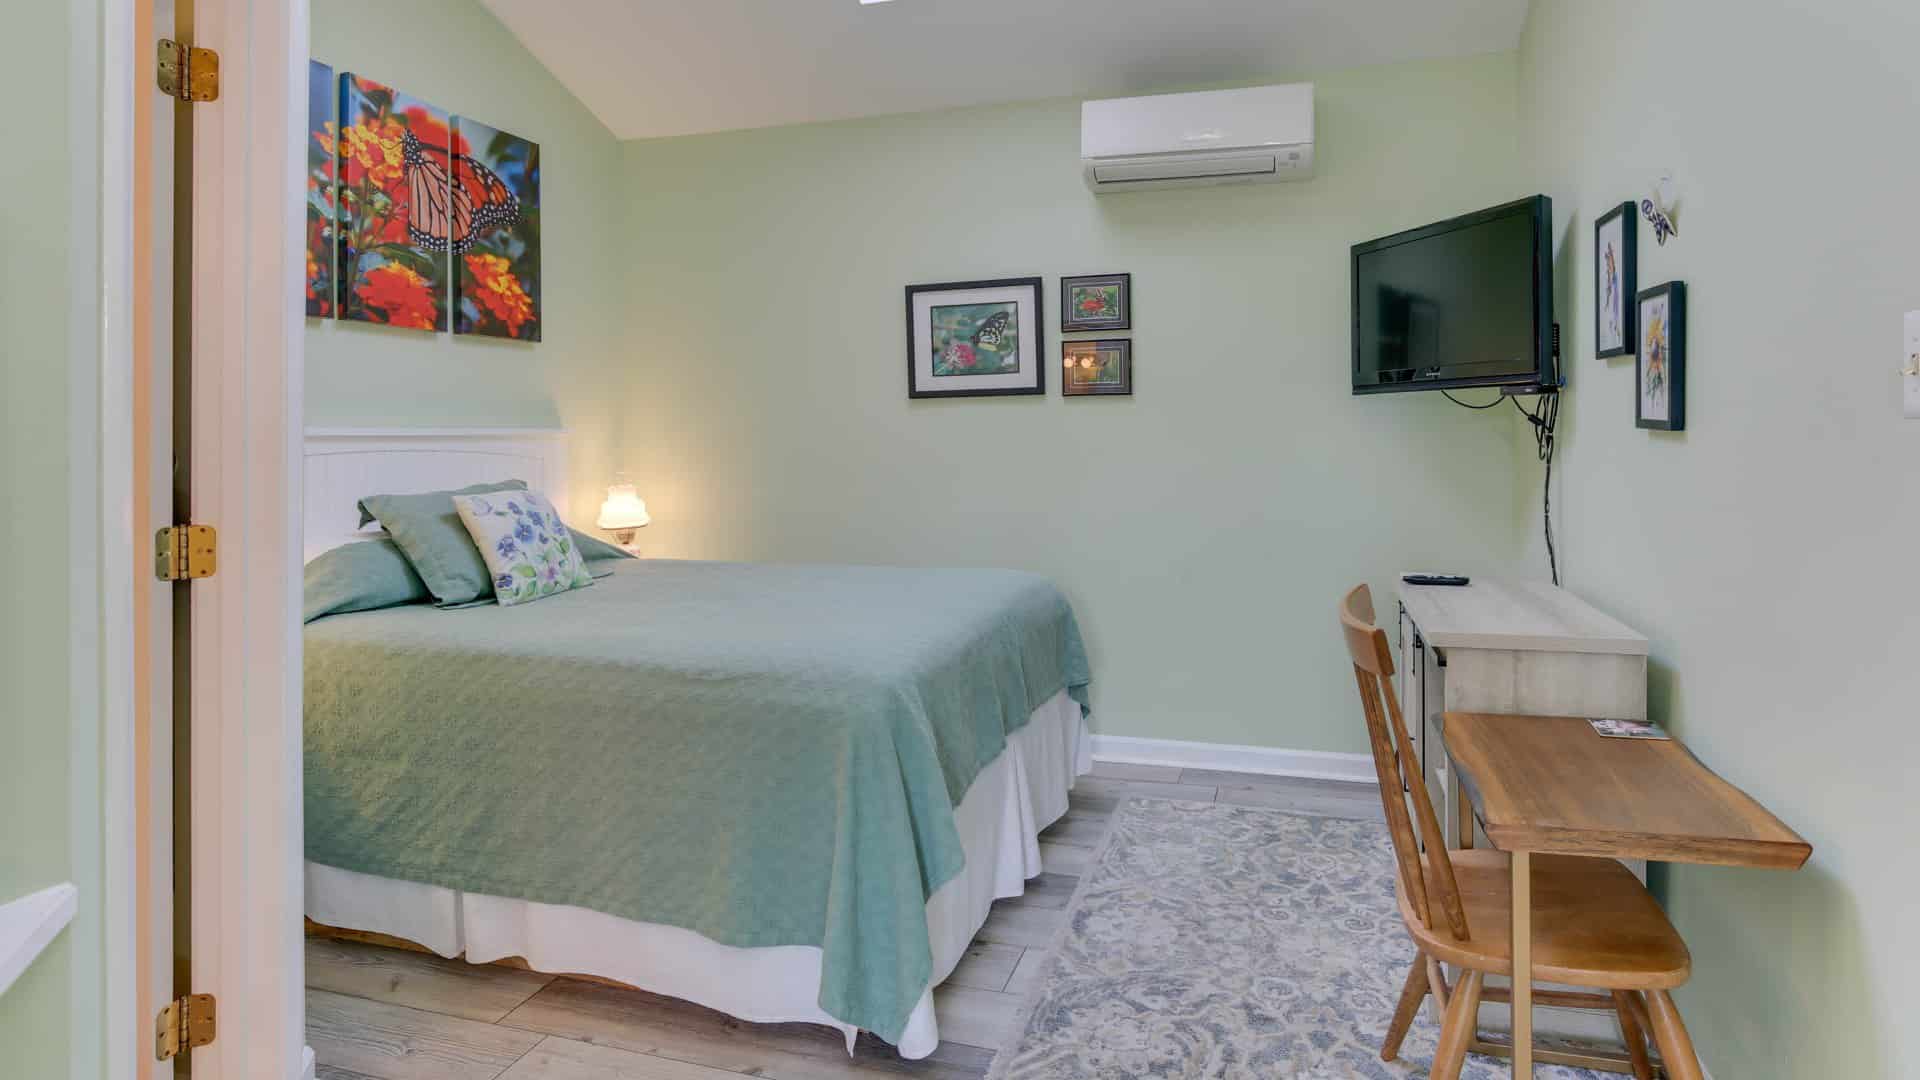 Bedroom with light green walls, hardwood flooring, light green bedding, wood desk and chair, and flatscreen TV